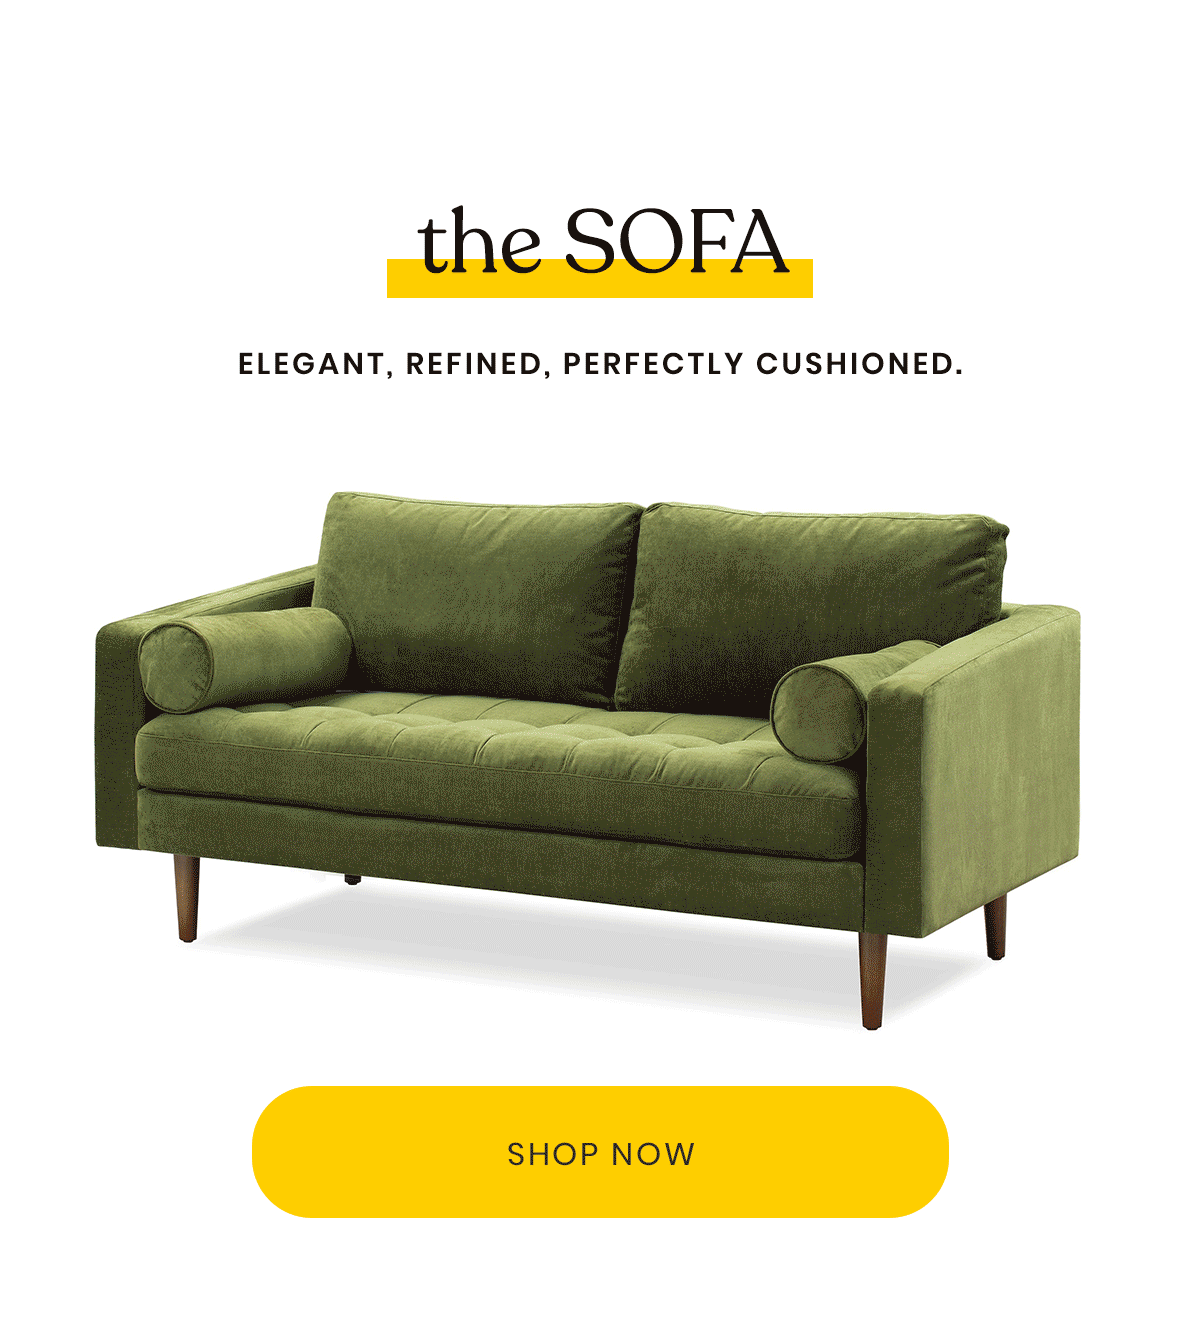 The Sofa - Elegant, Refined, Perfectly Cushioned